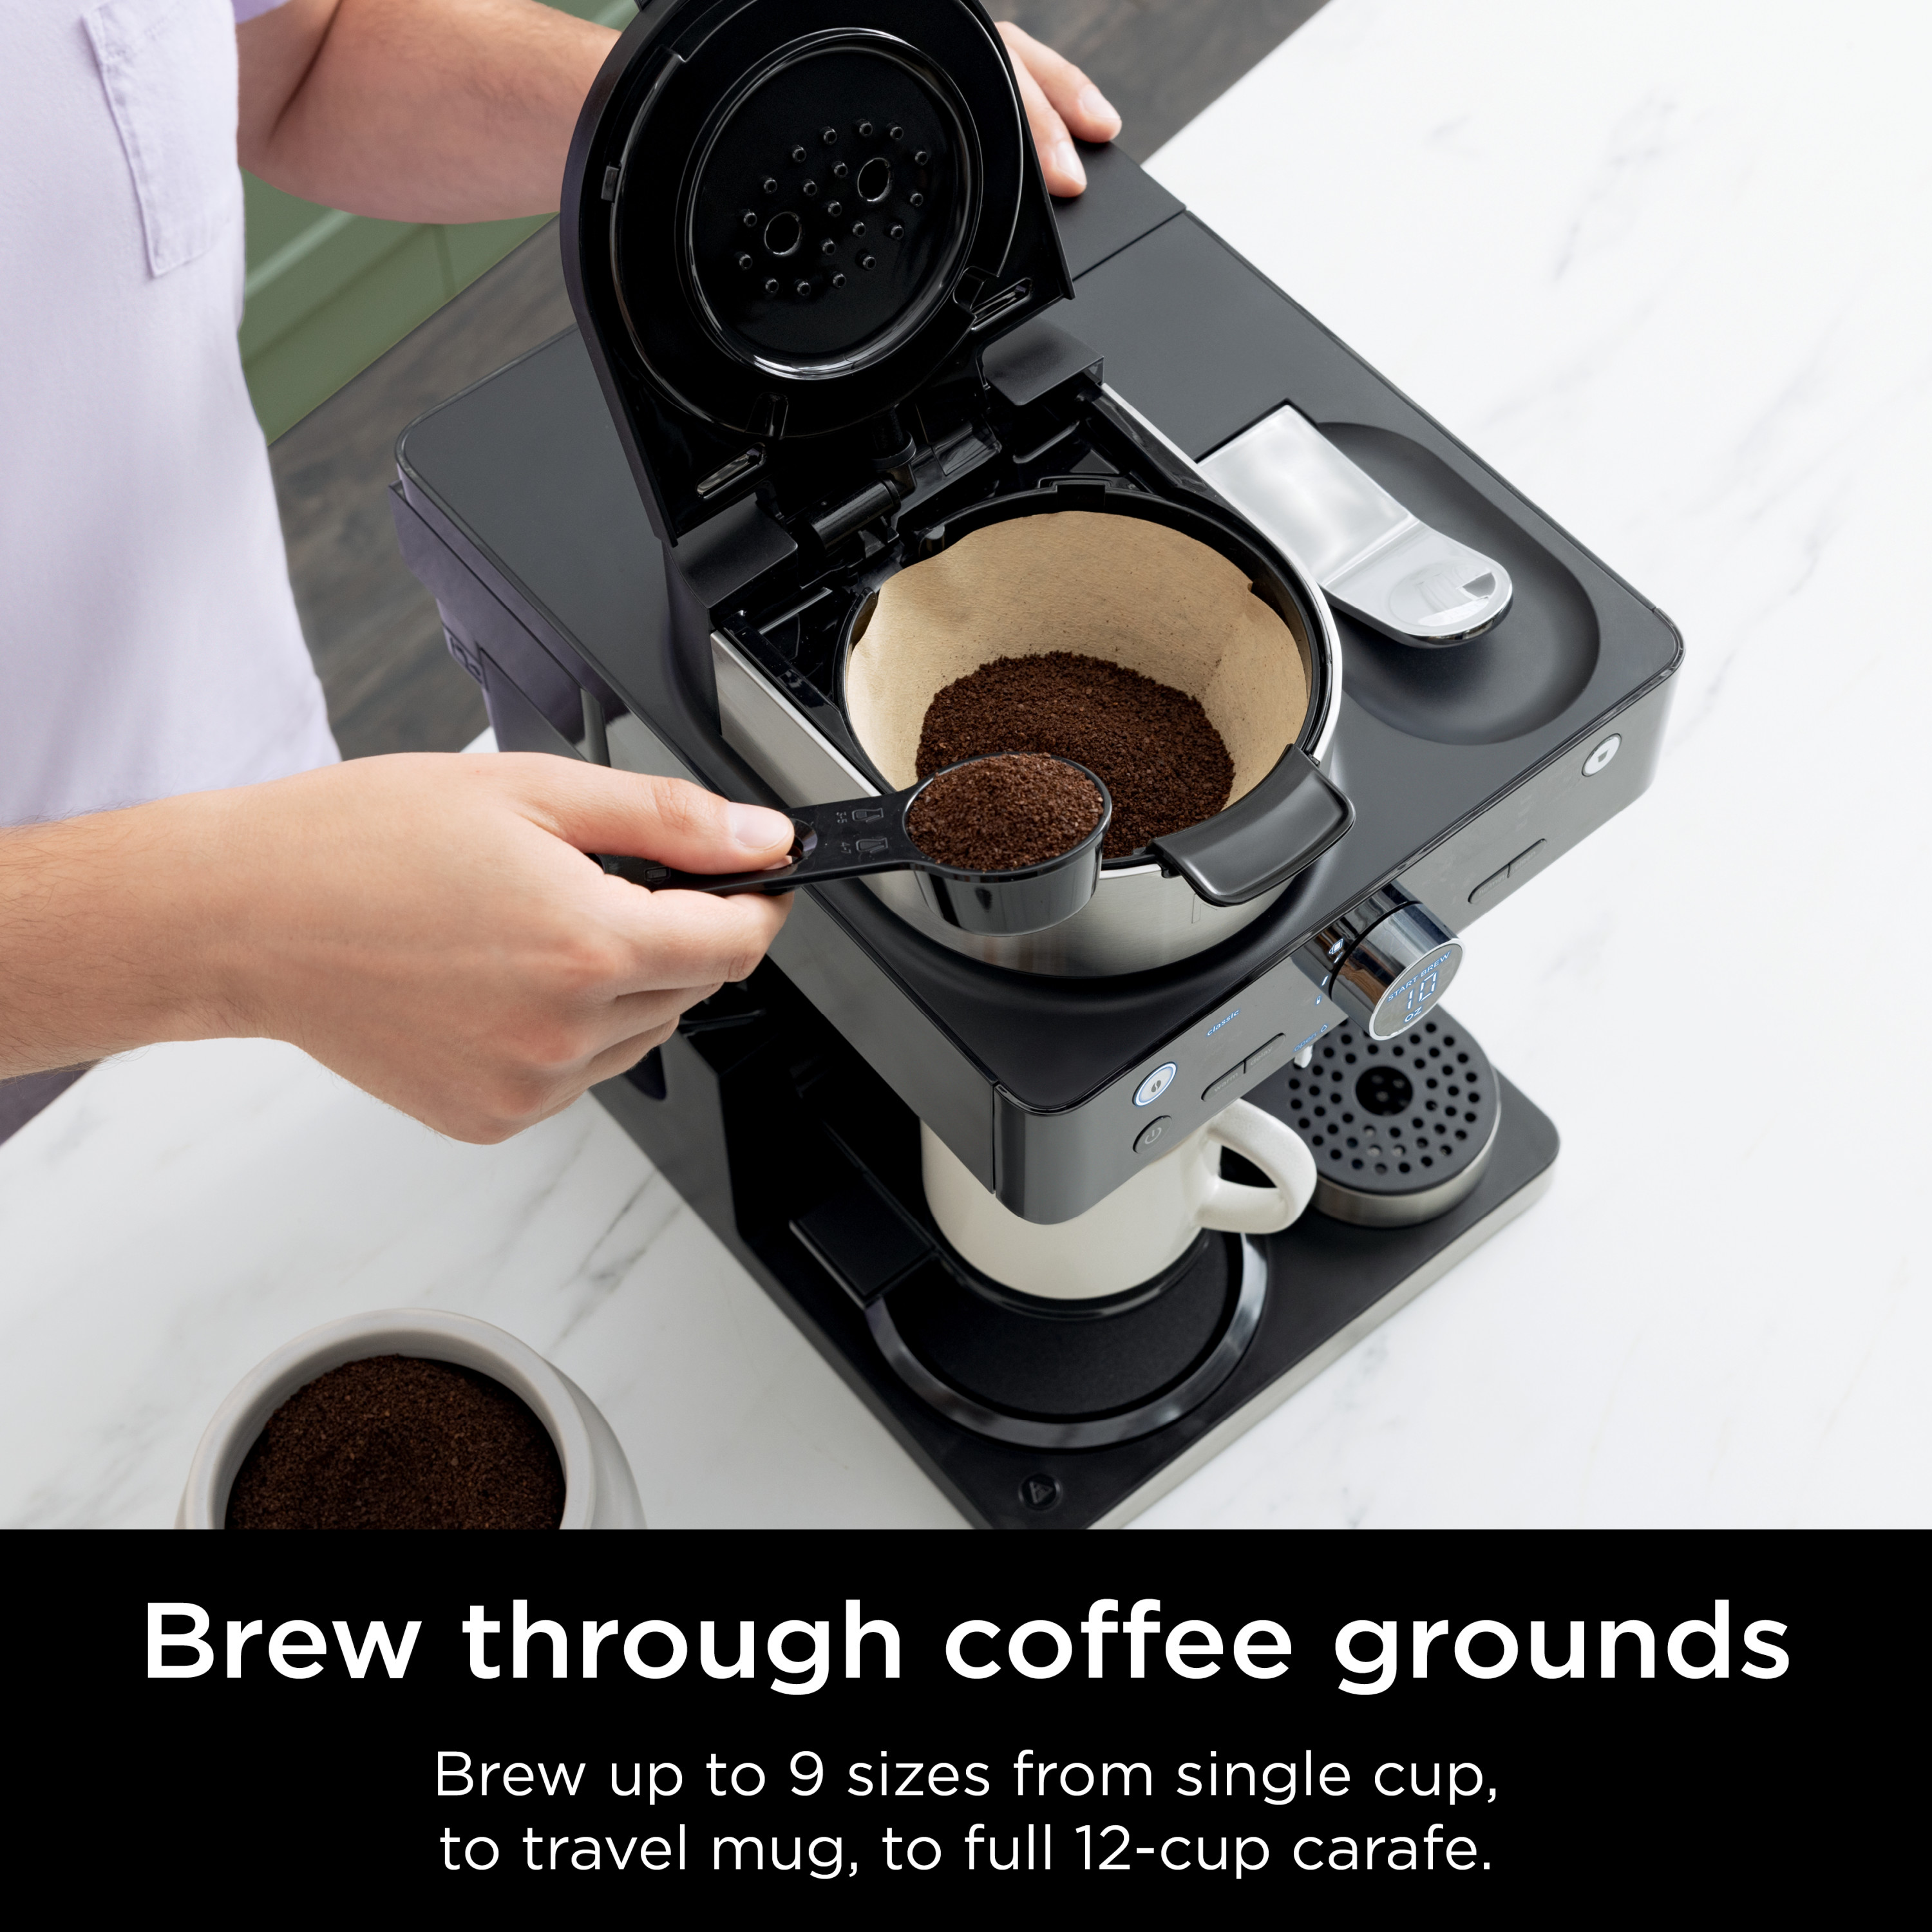 Ninja Espresso Coffee Barista System 3 Espresso Brew Styles Carafe Built-in Frother